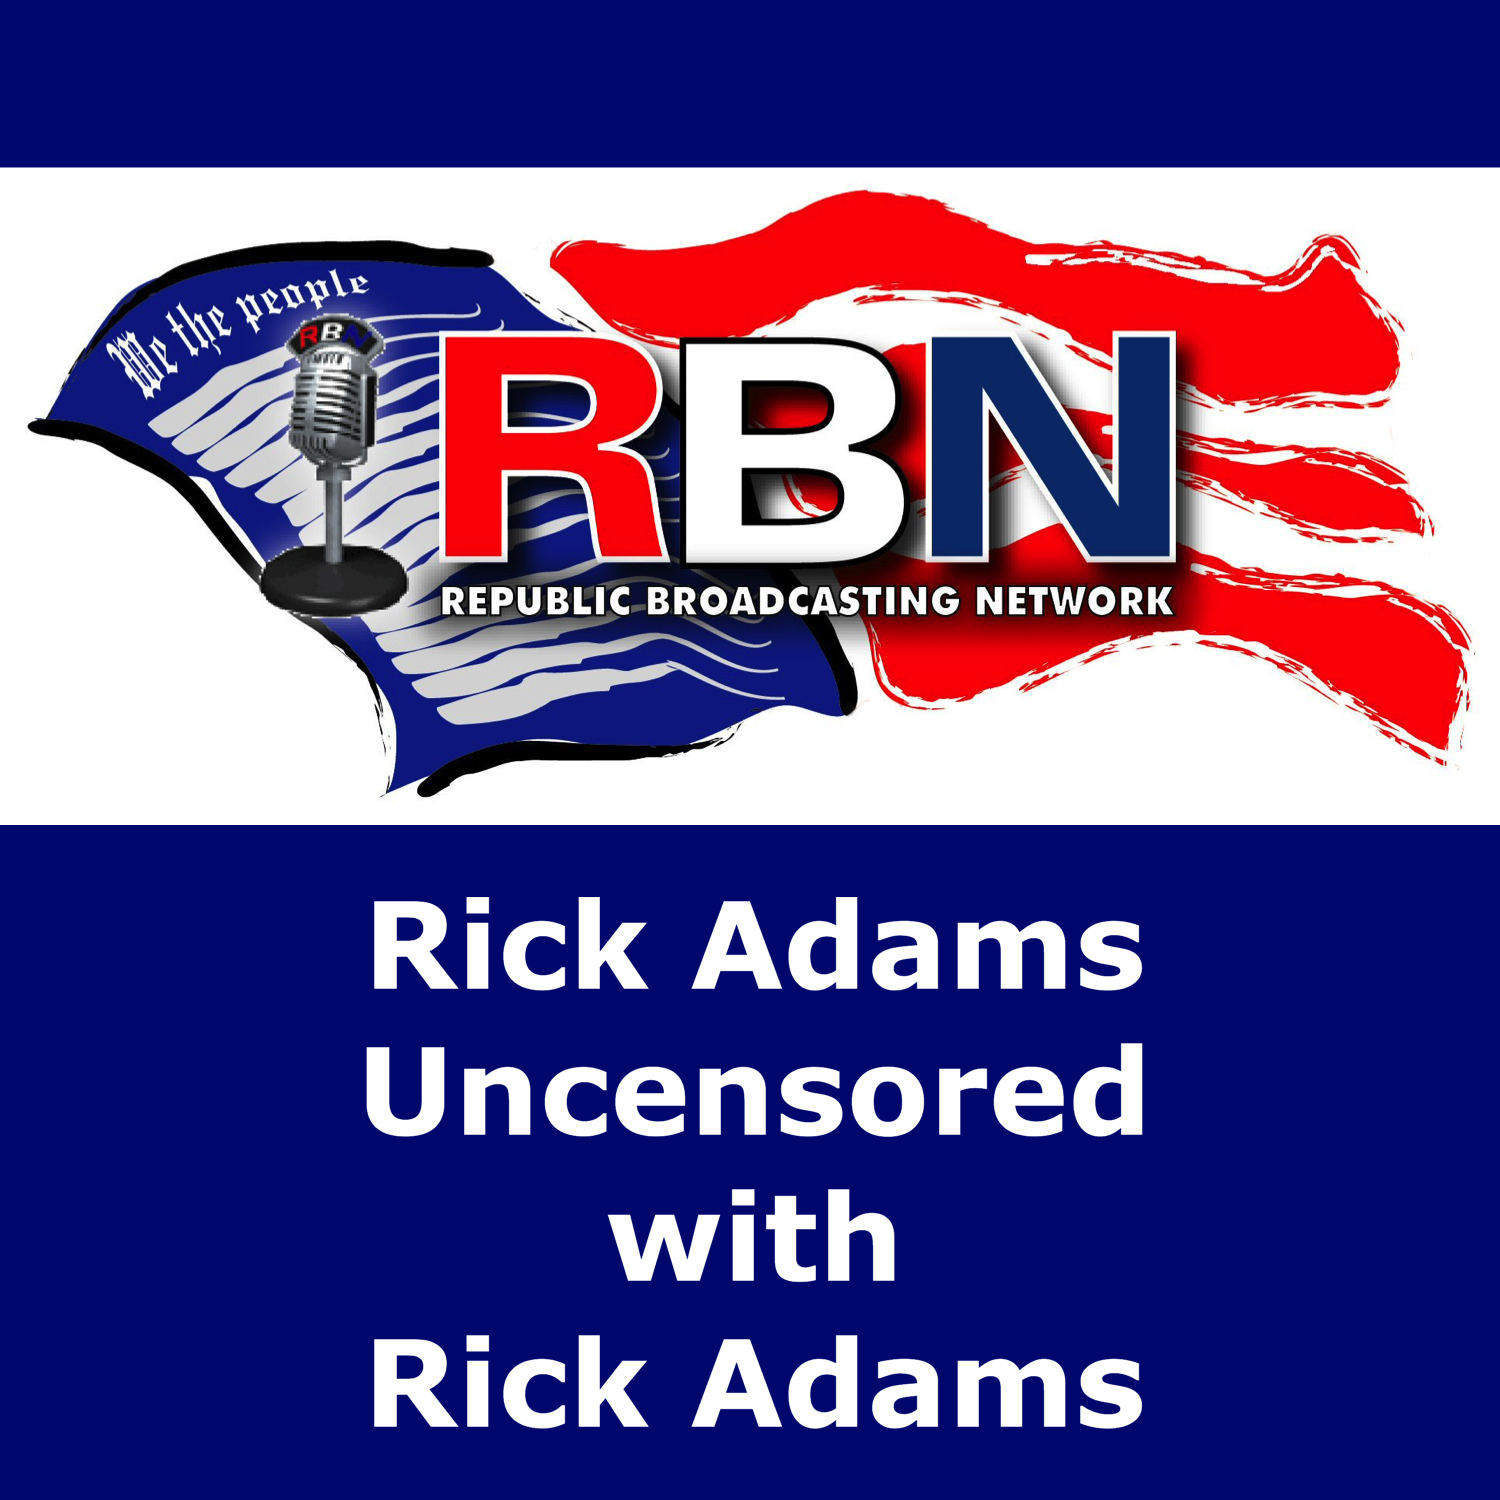 Rick Adams Uncensored